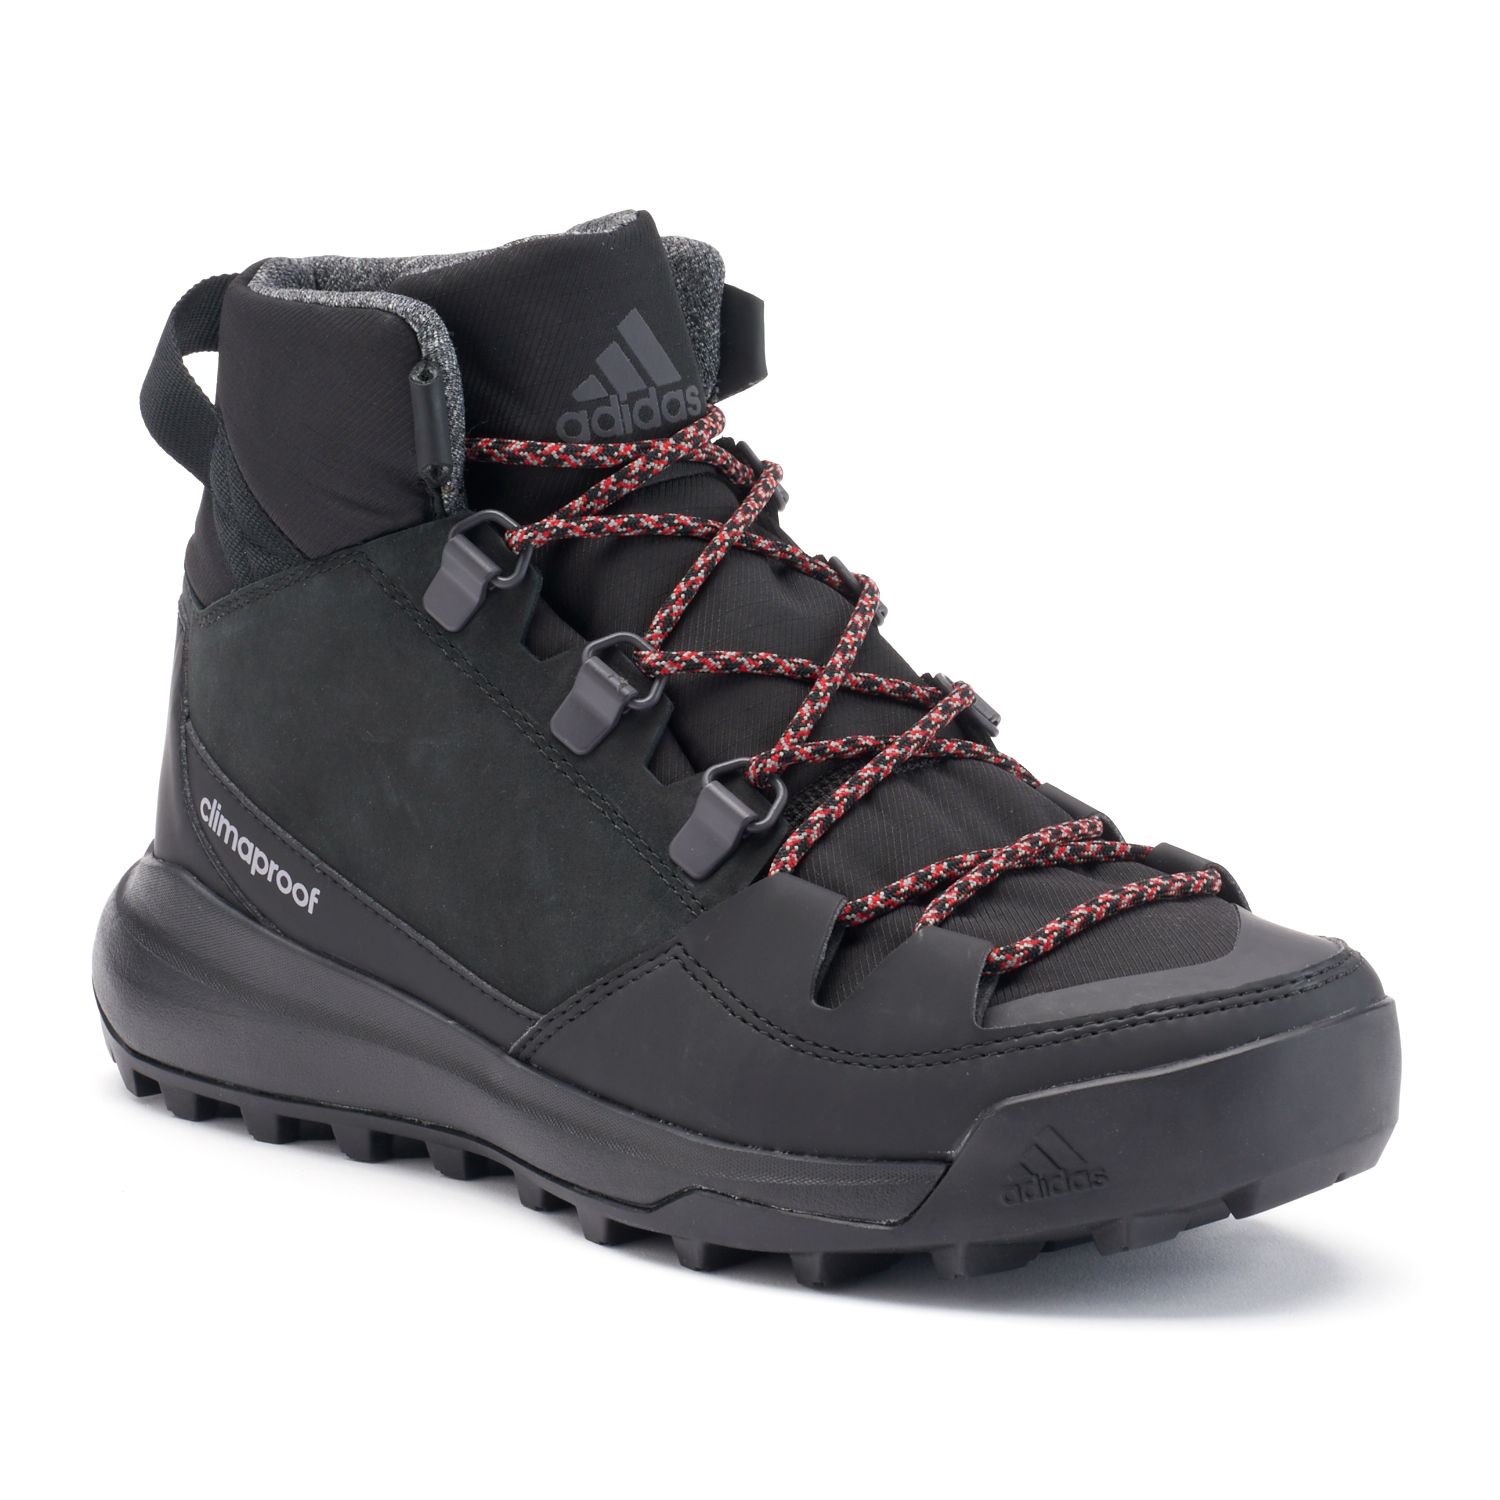 adidas Outdoor CW Winterpitch Mid CP Men's Waterproof Hiking Boots